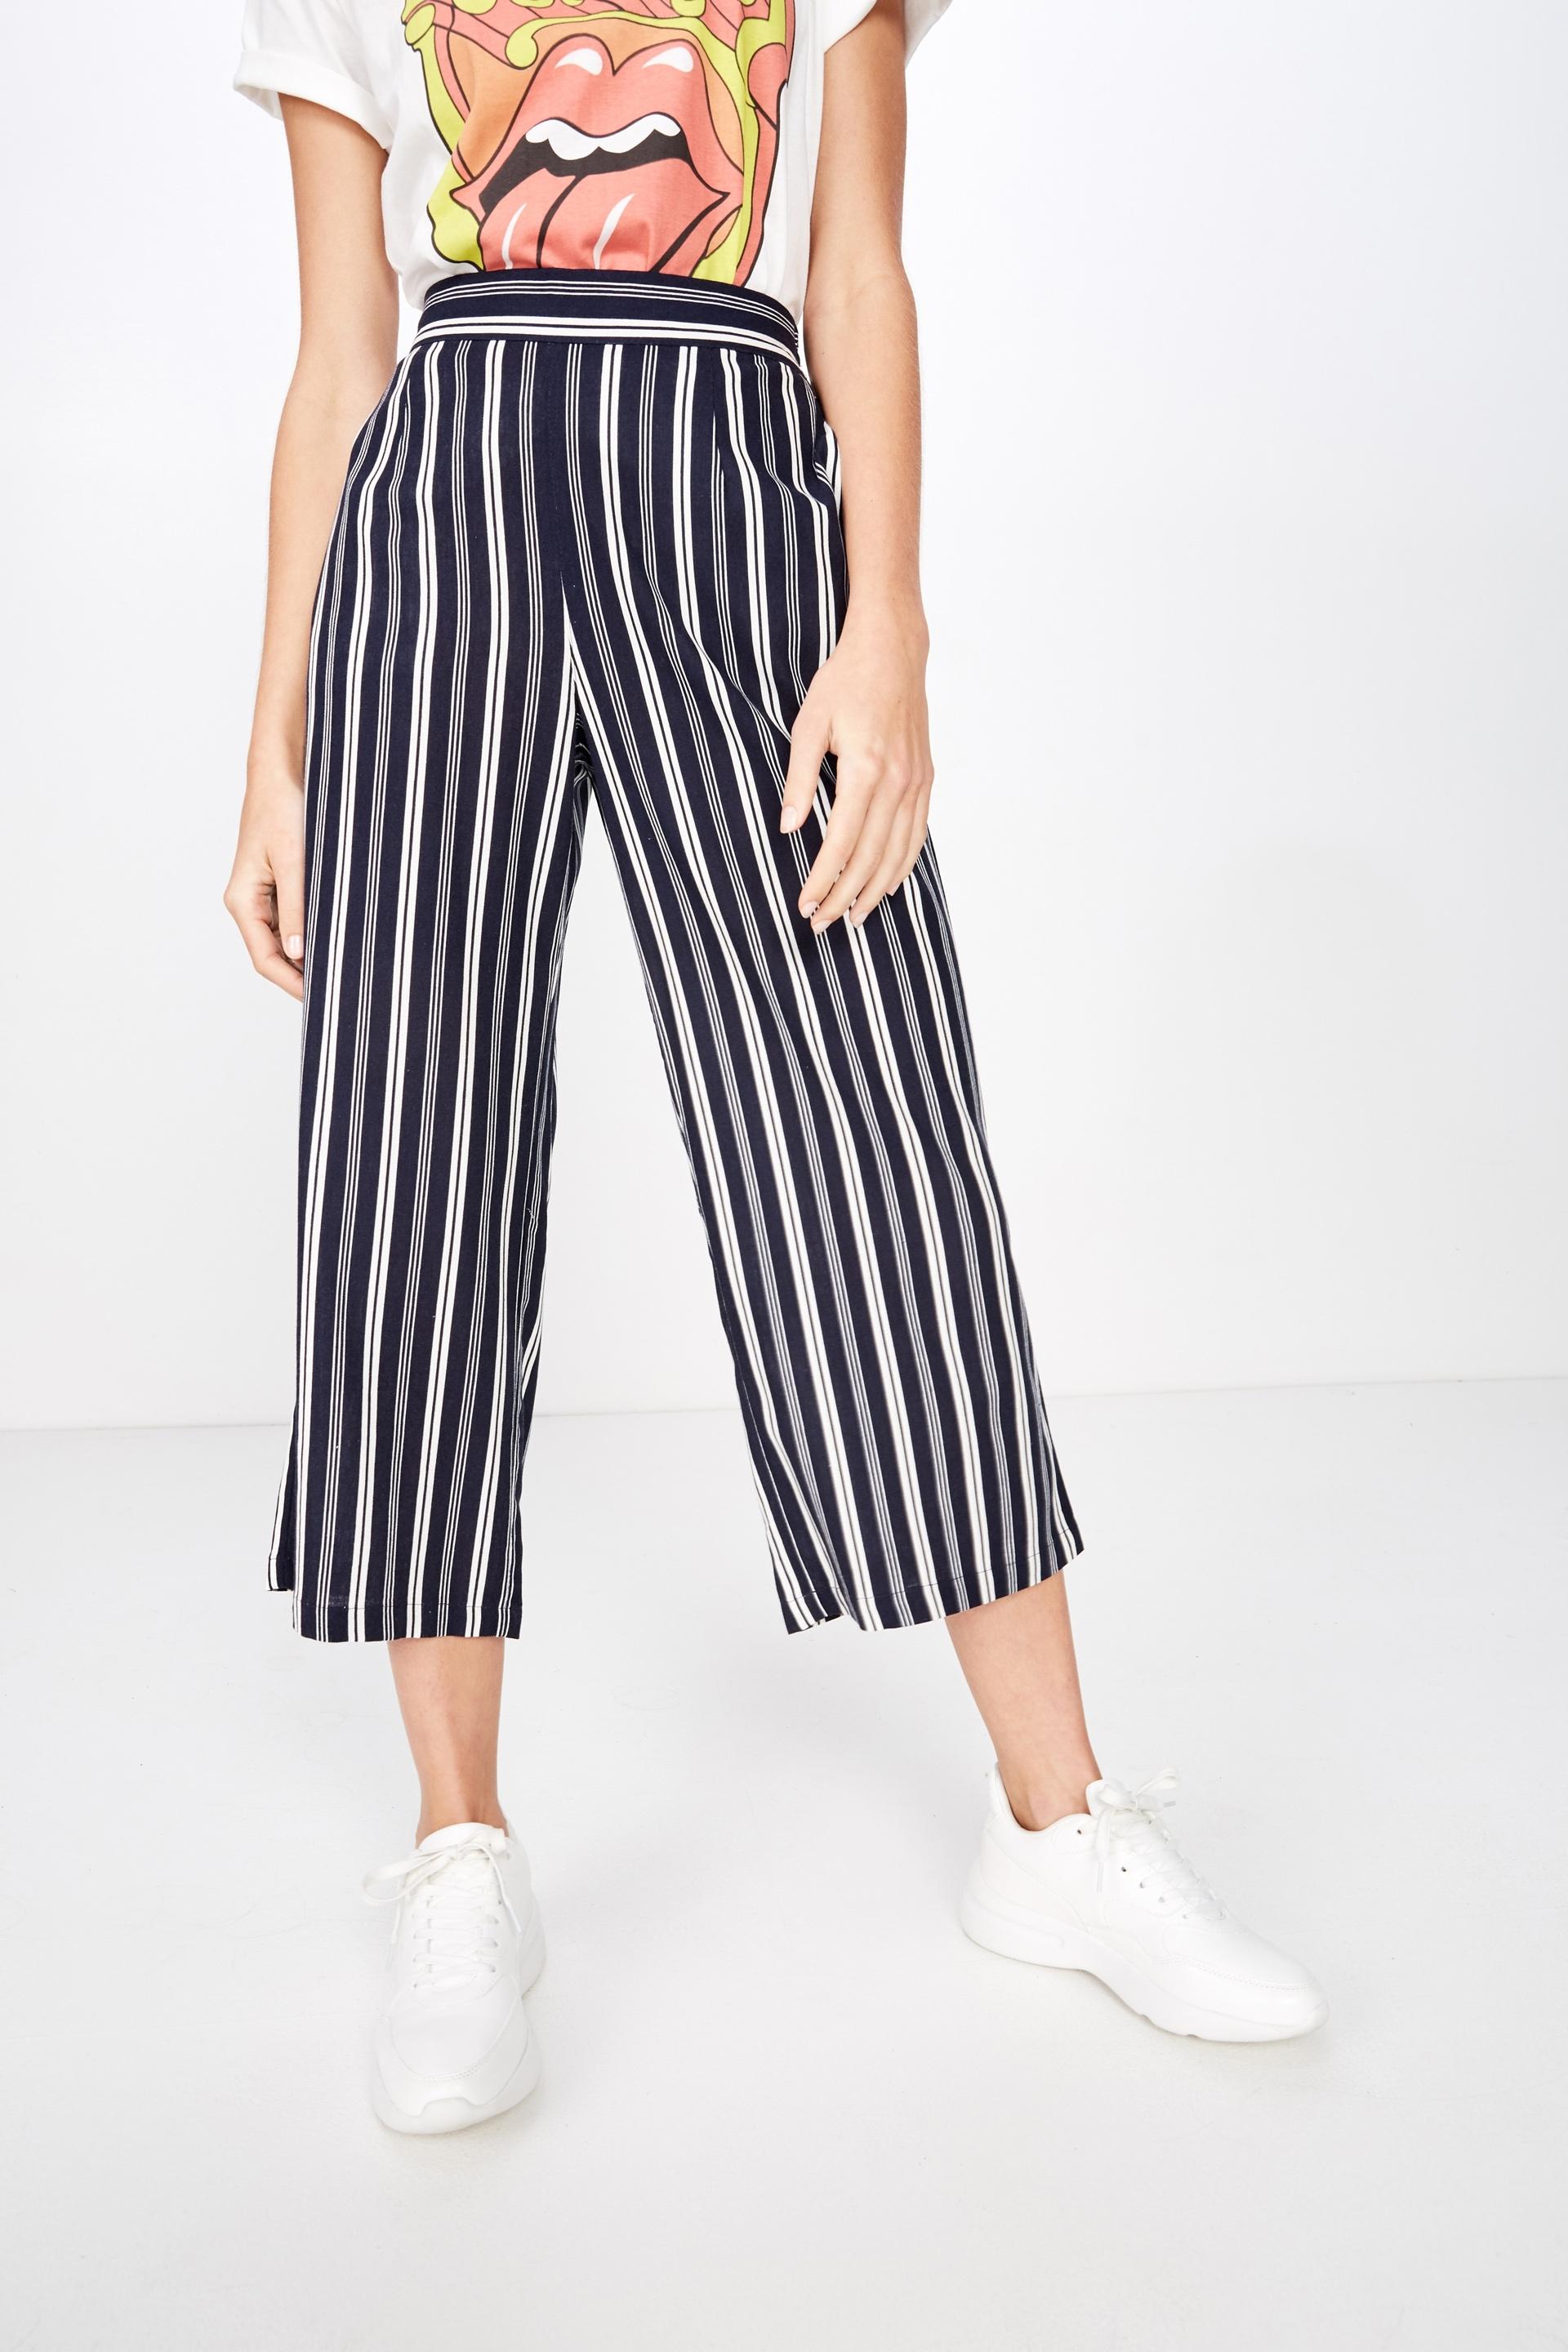 Sophie culotte - maya multi stripe mood indigo Cotton On Trousers ...